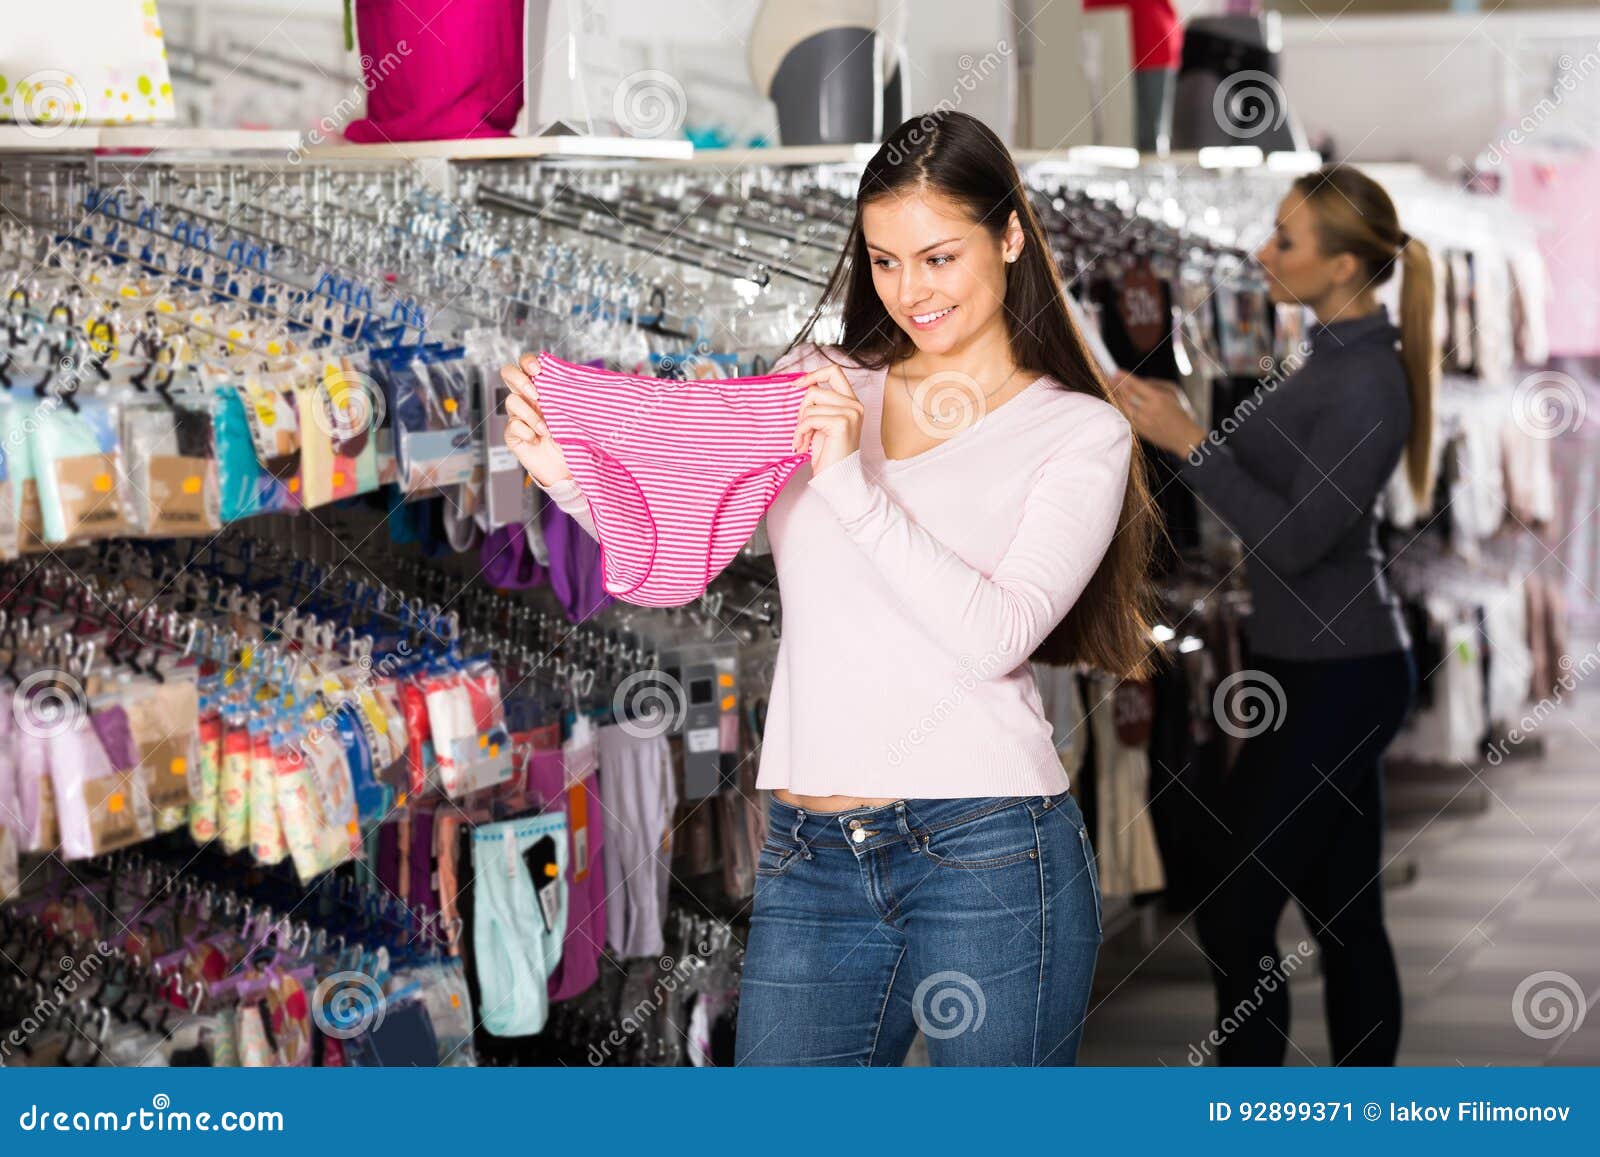 magasin de sous vetement feminin